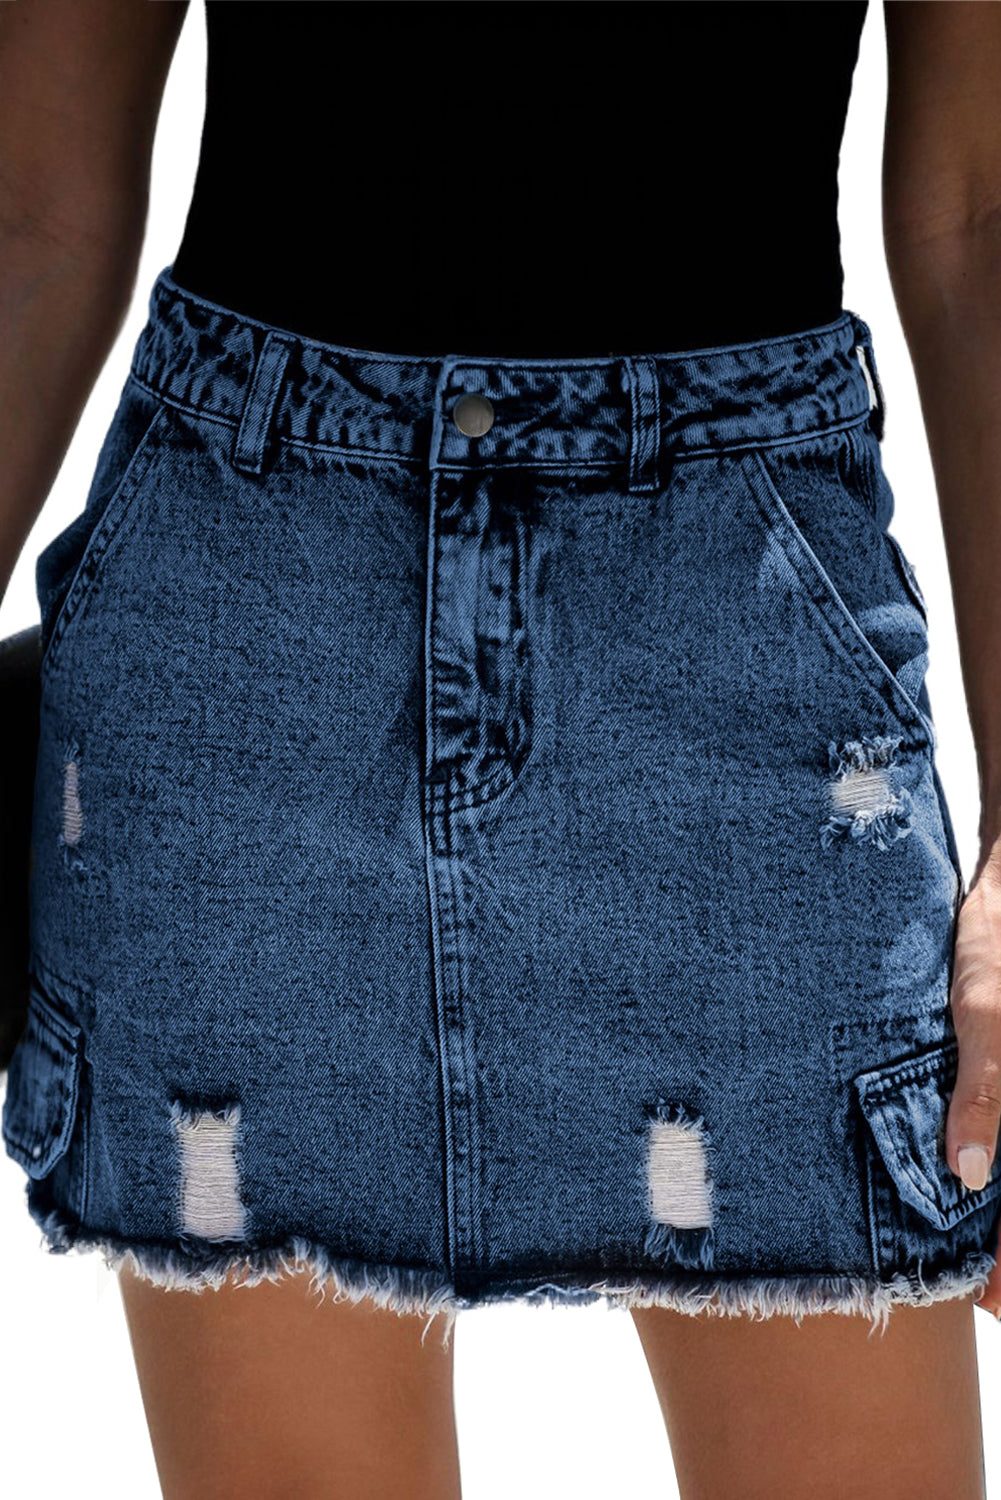 High Waist Distressed Denim Mini Skirt with Pocket